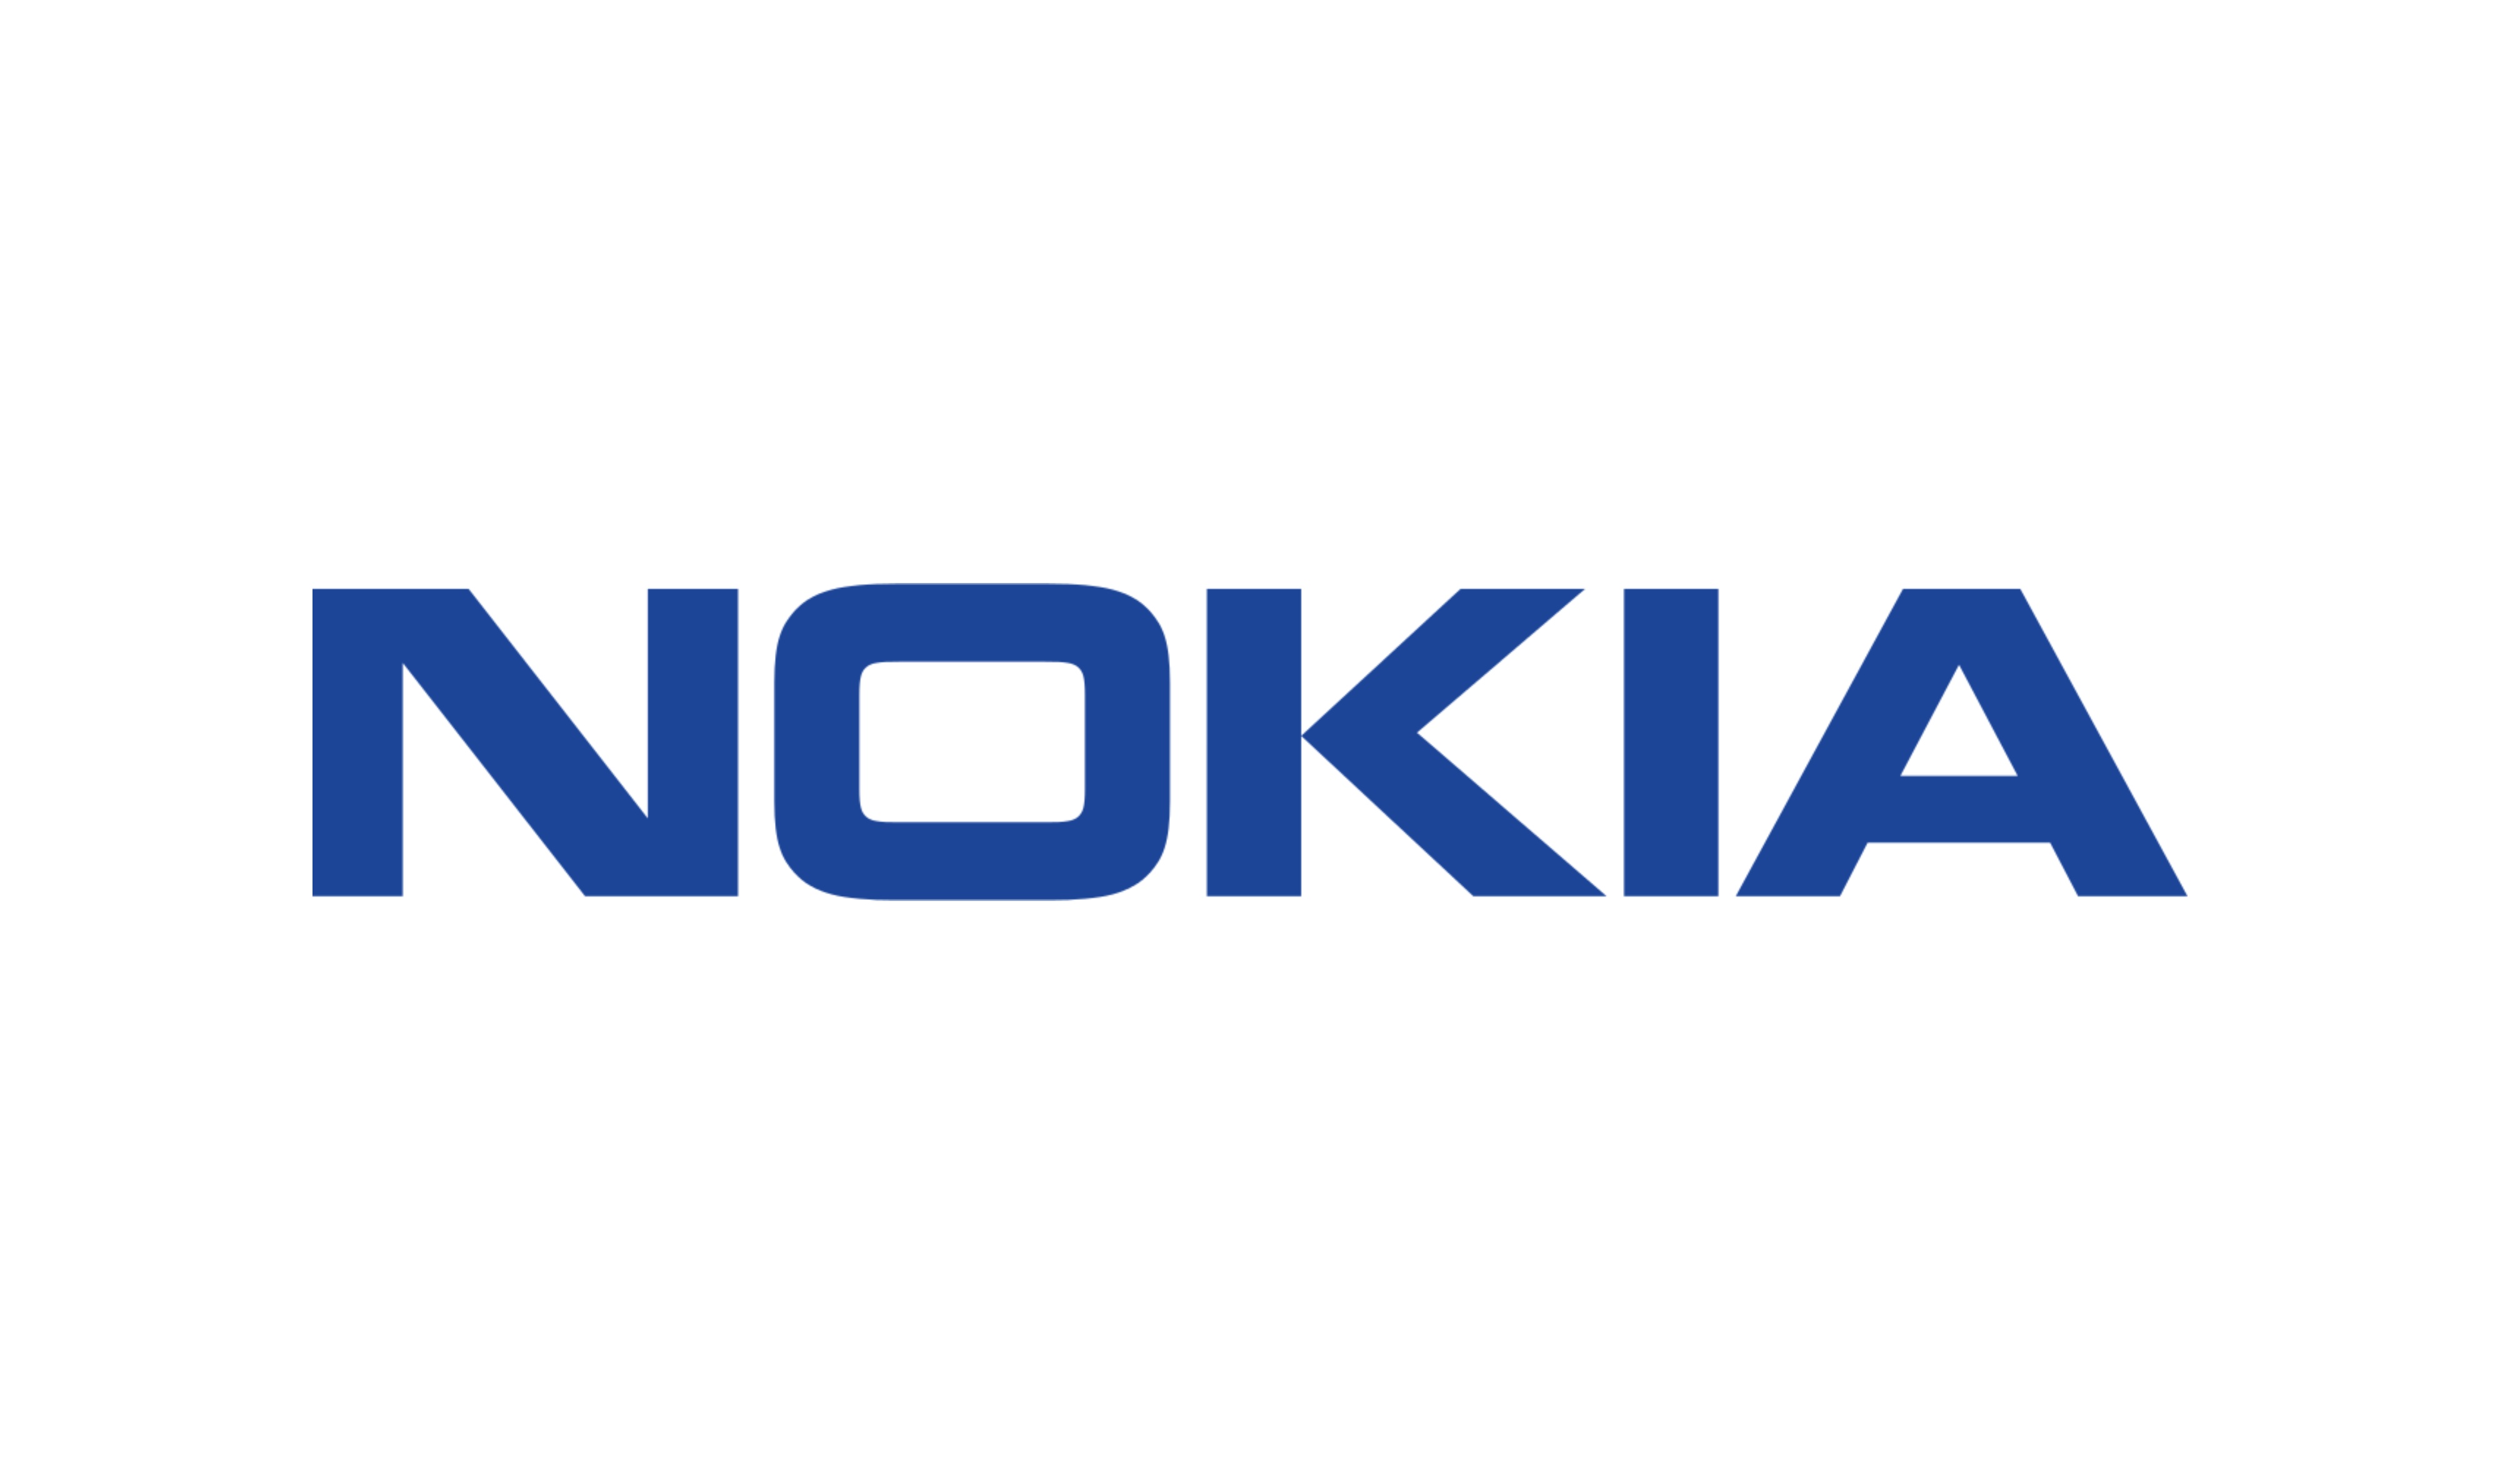 Nokia Logo Featured